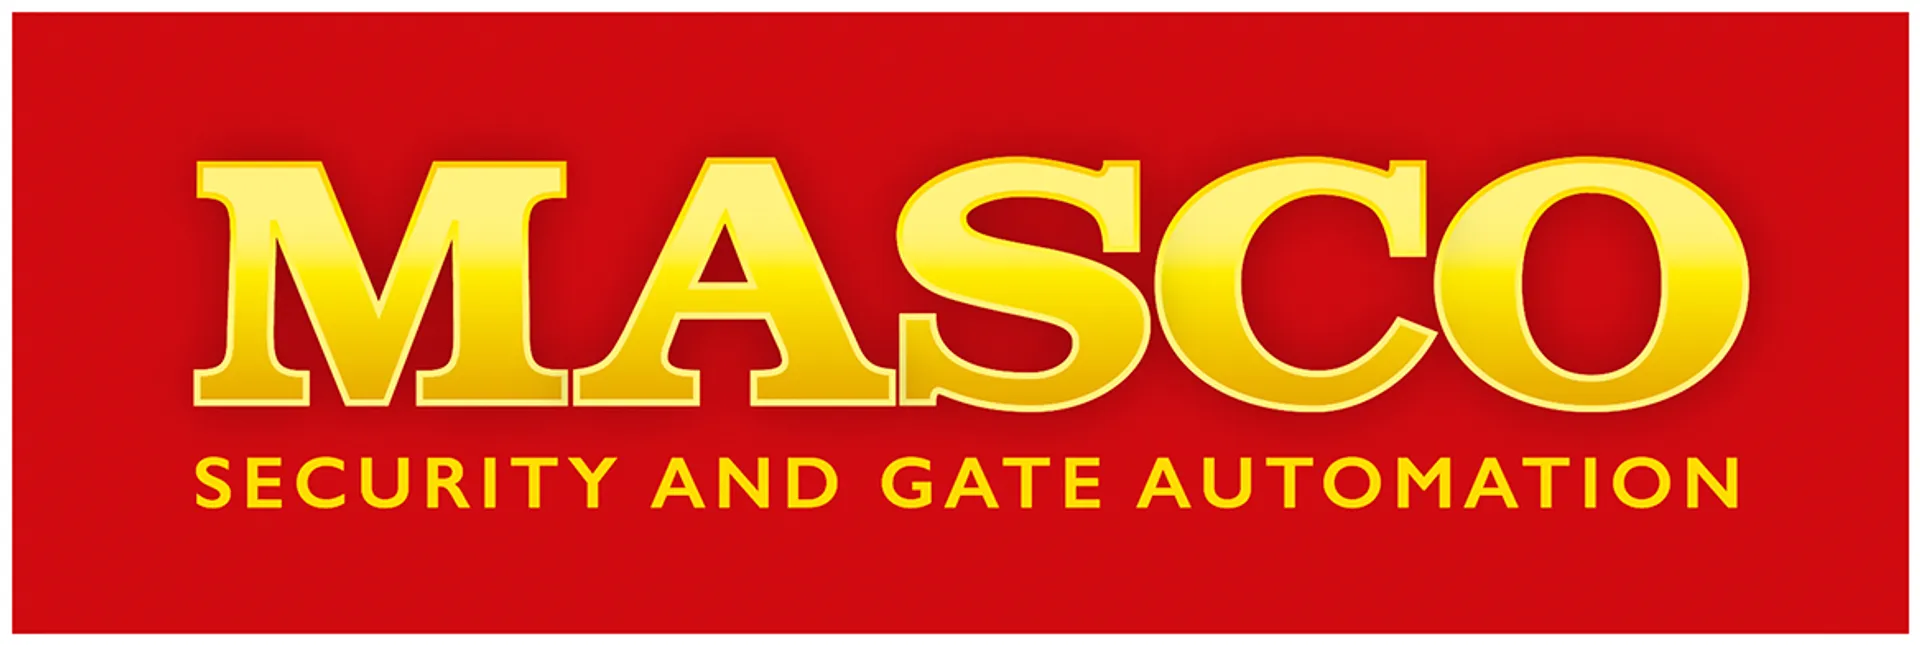 MASCO logo